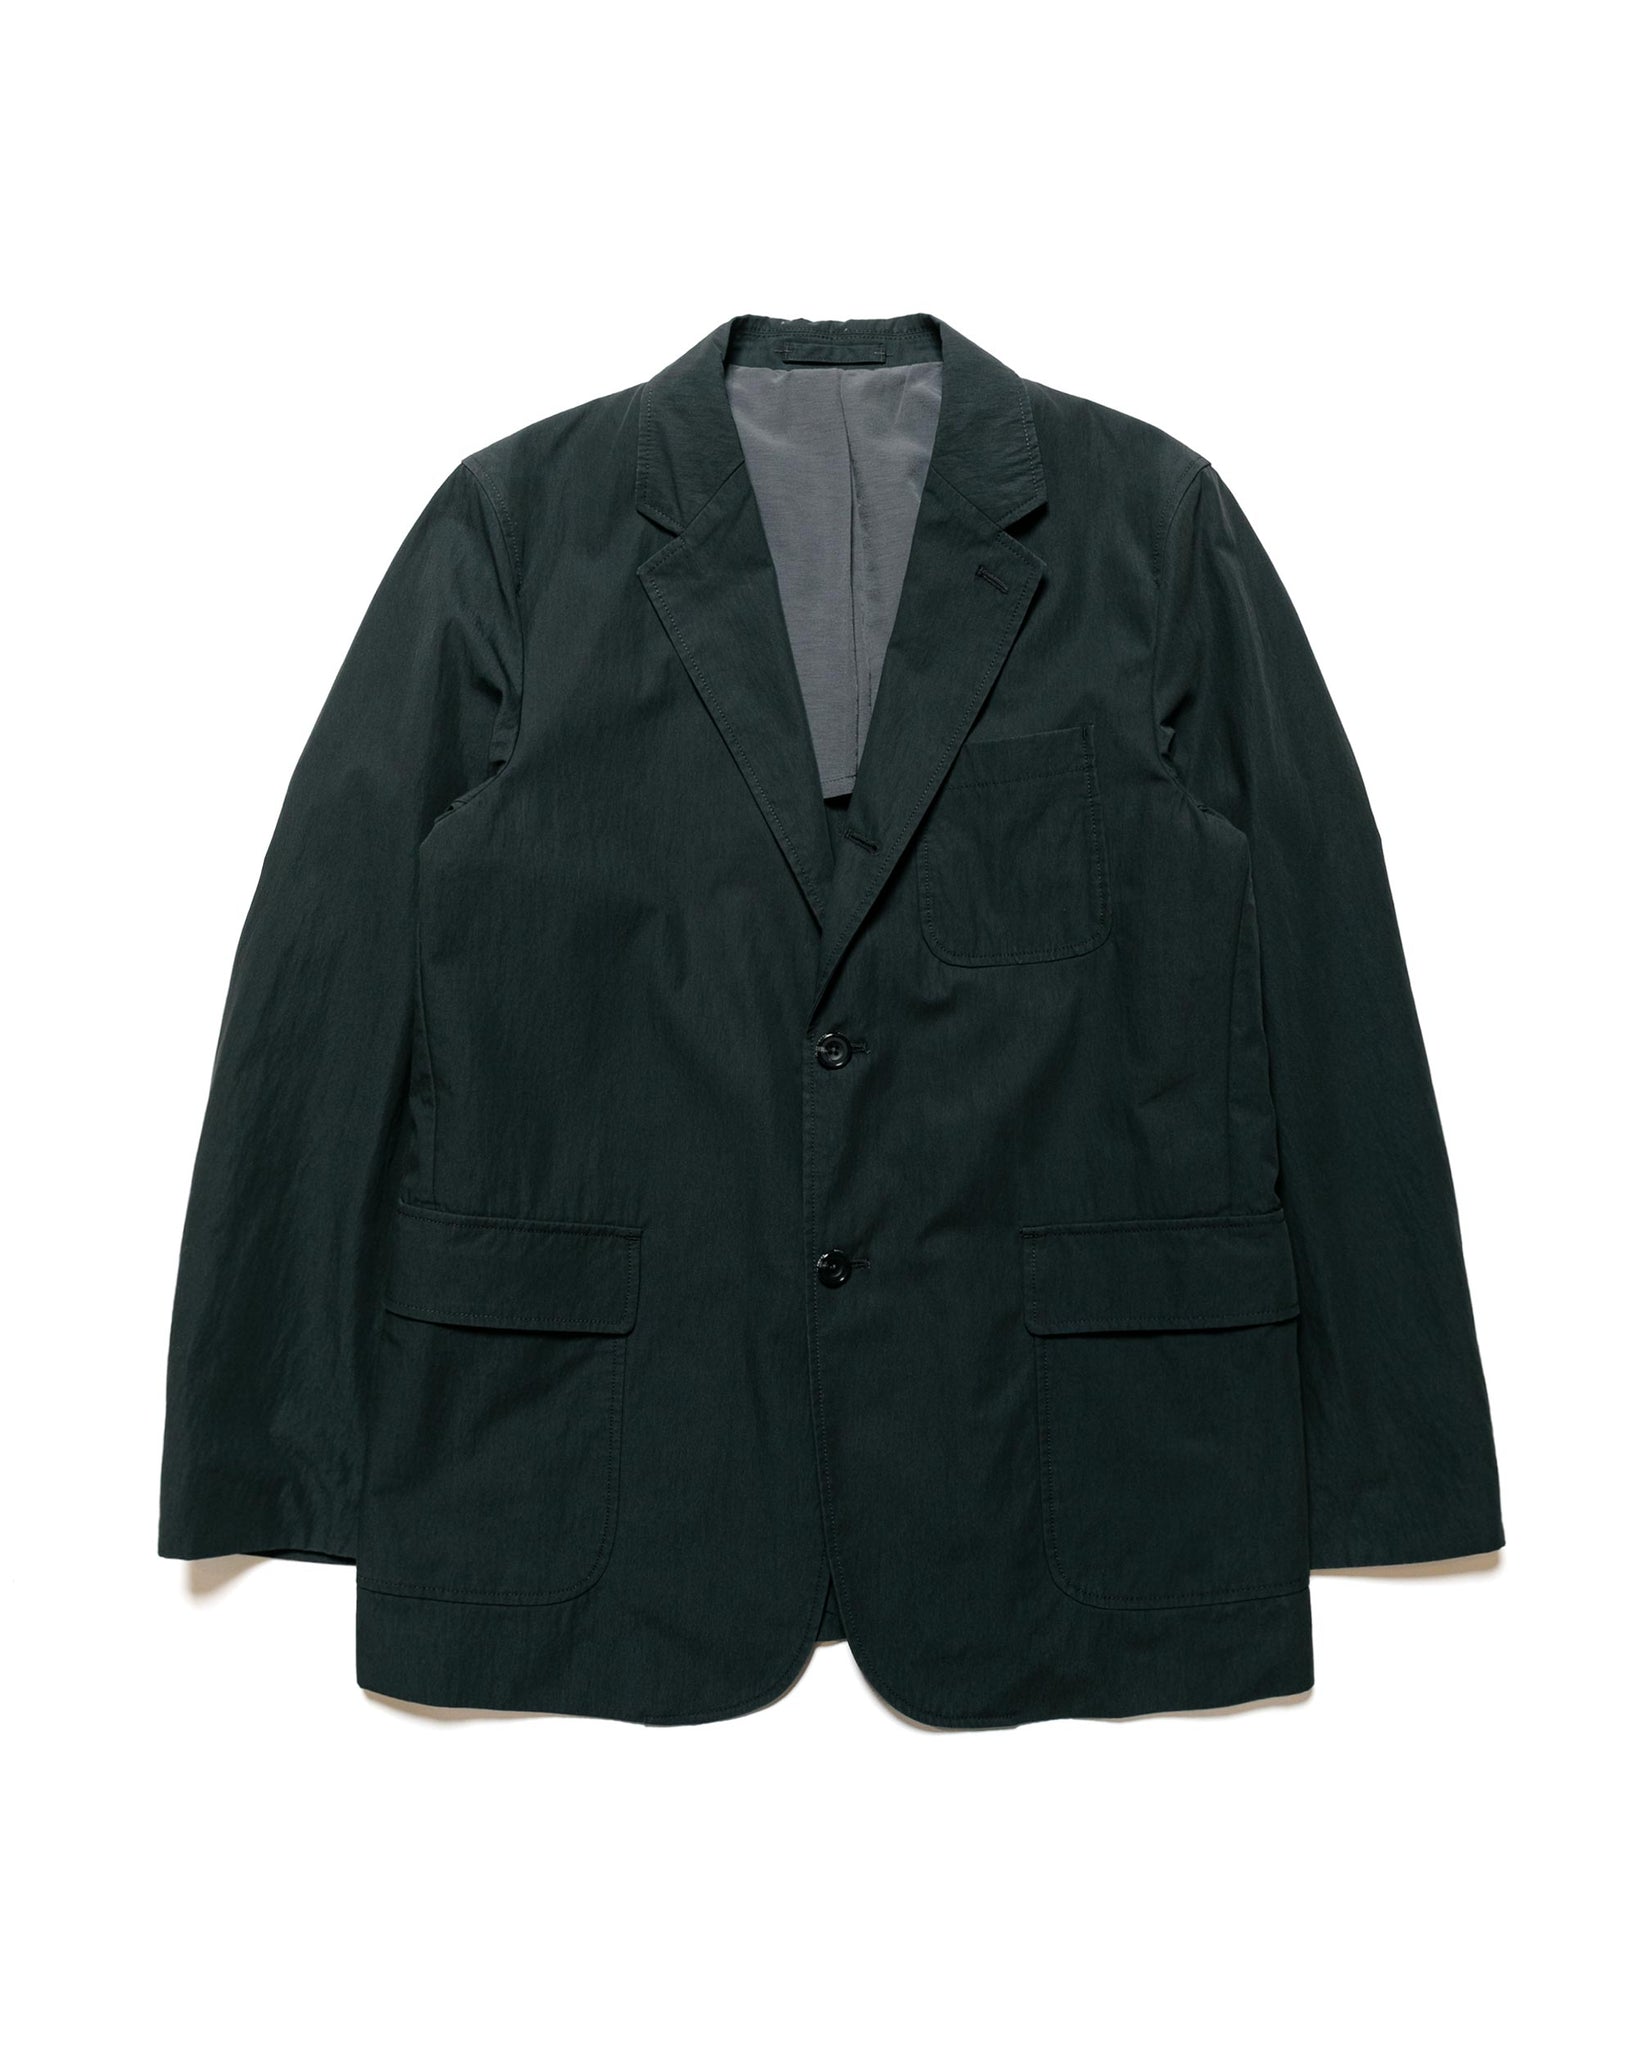 Beams Plus 3B Travel Jacket Comfort Cloth Charcoal Grey